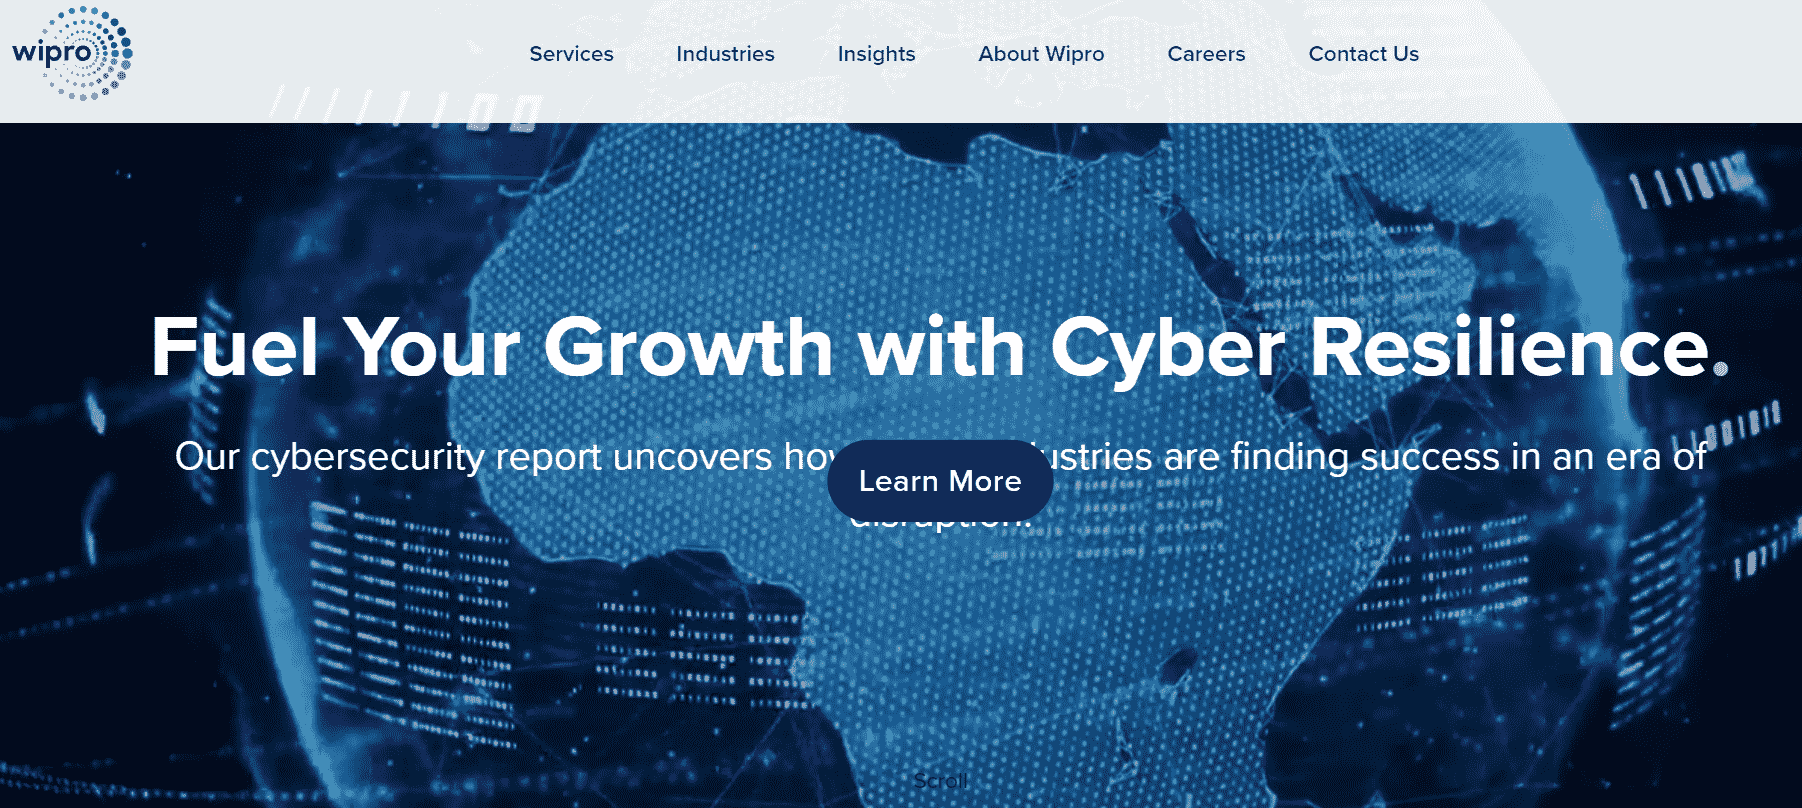 Accenture's website promoting growth through their BPO.